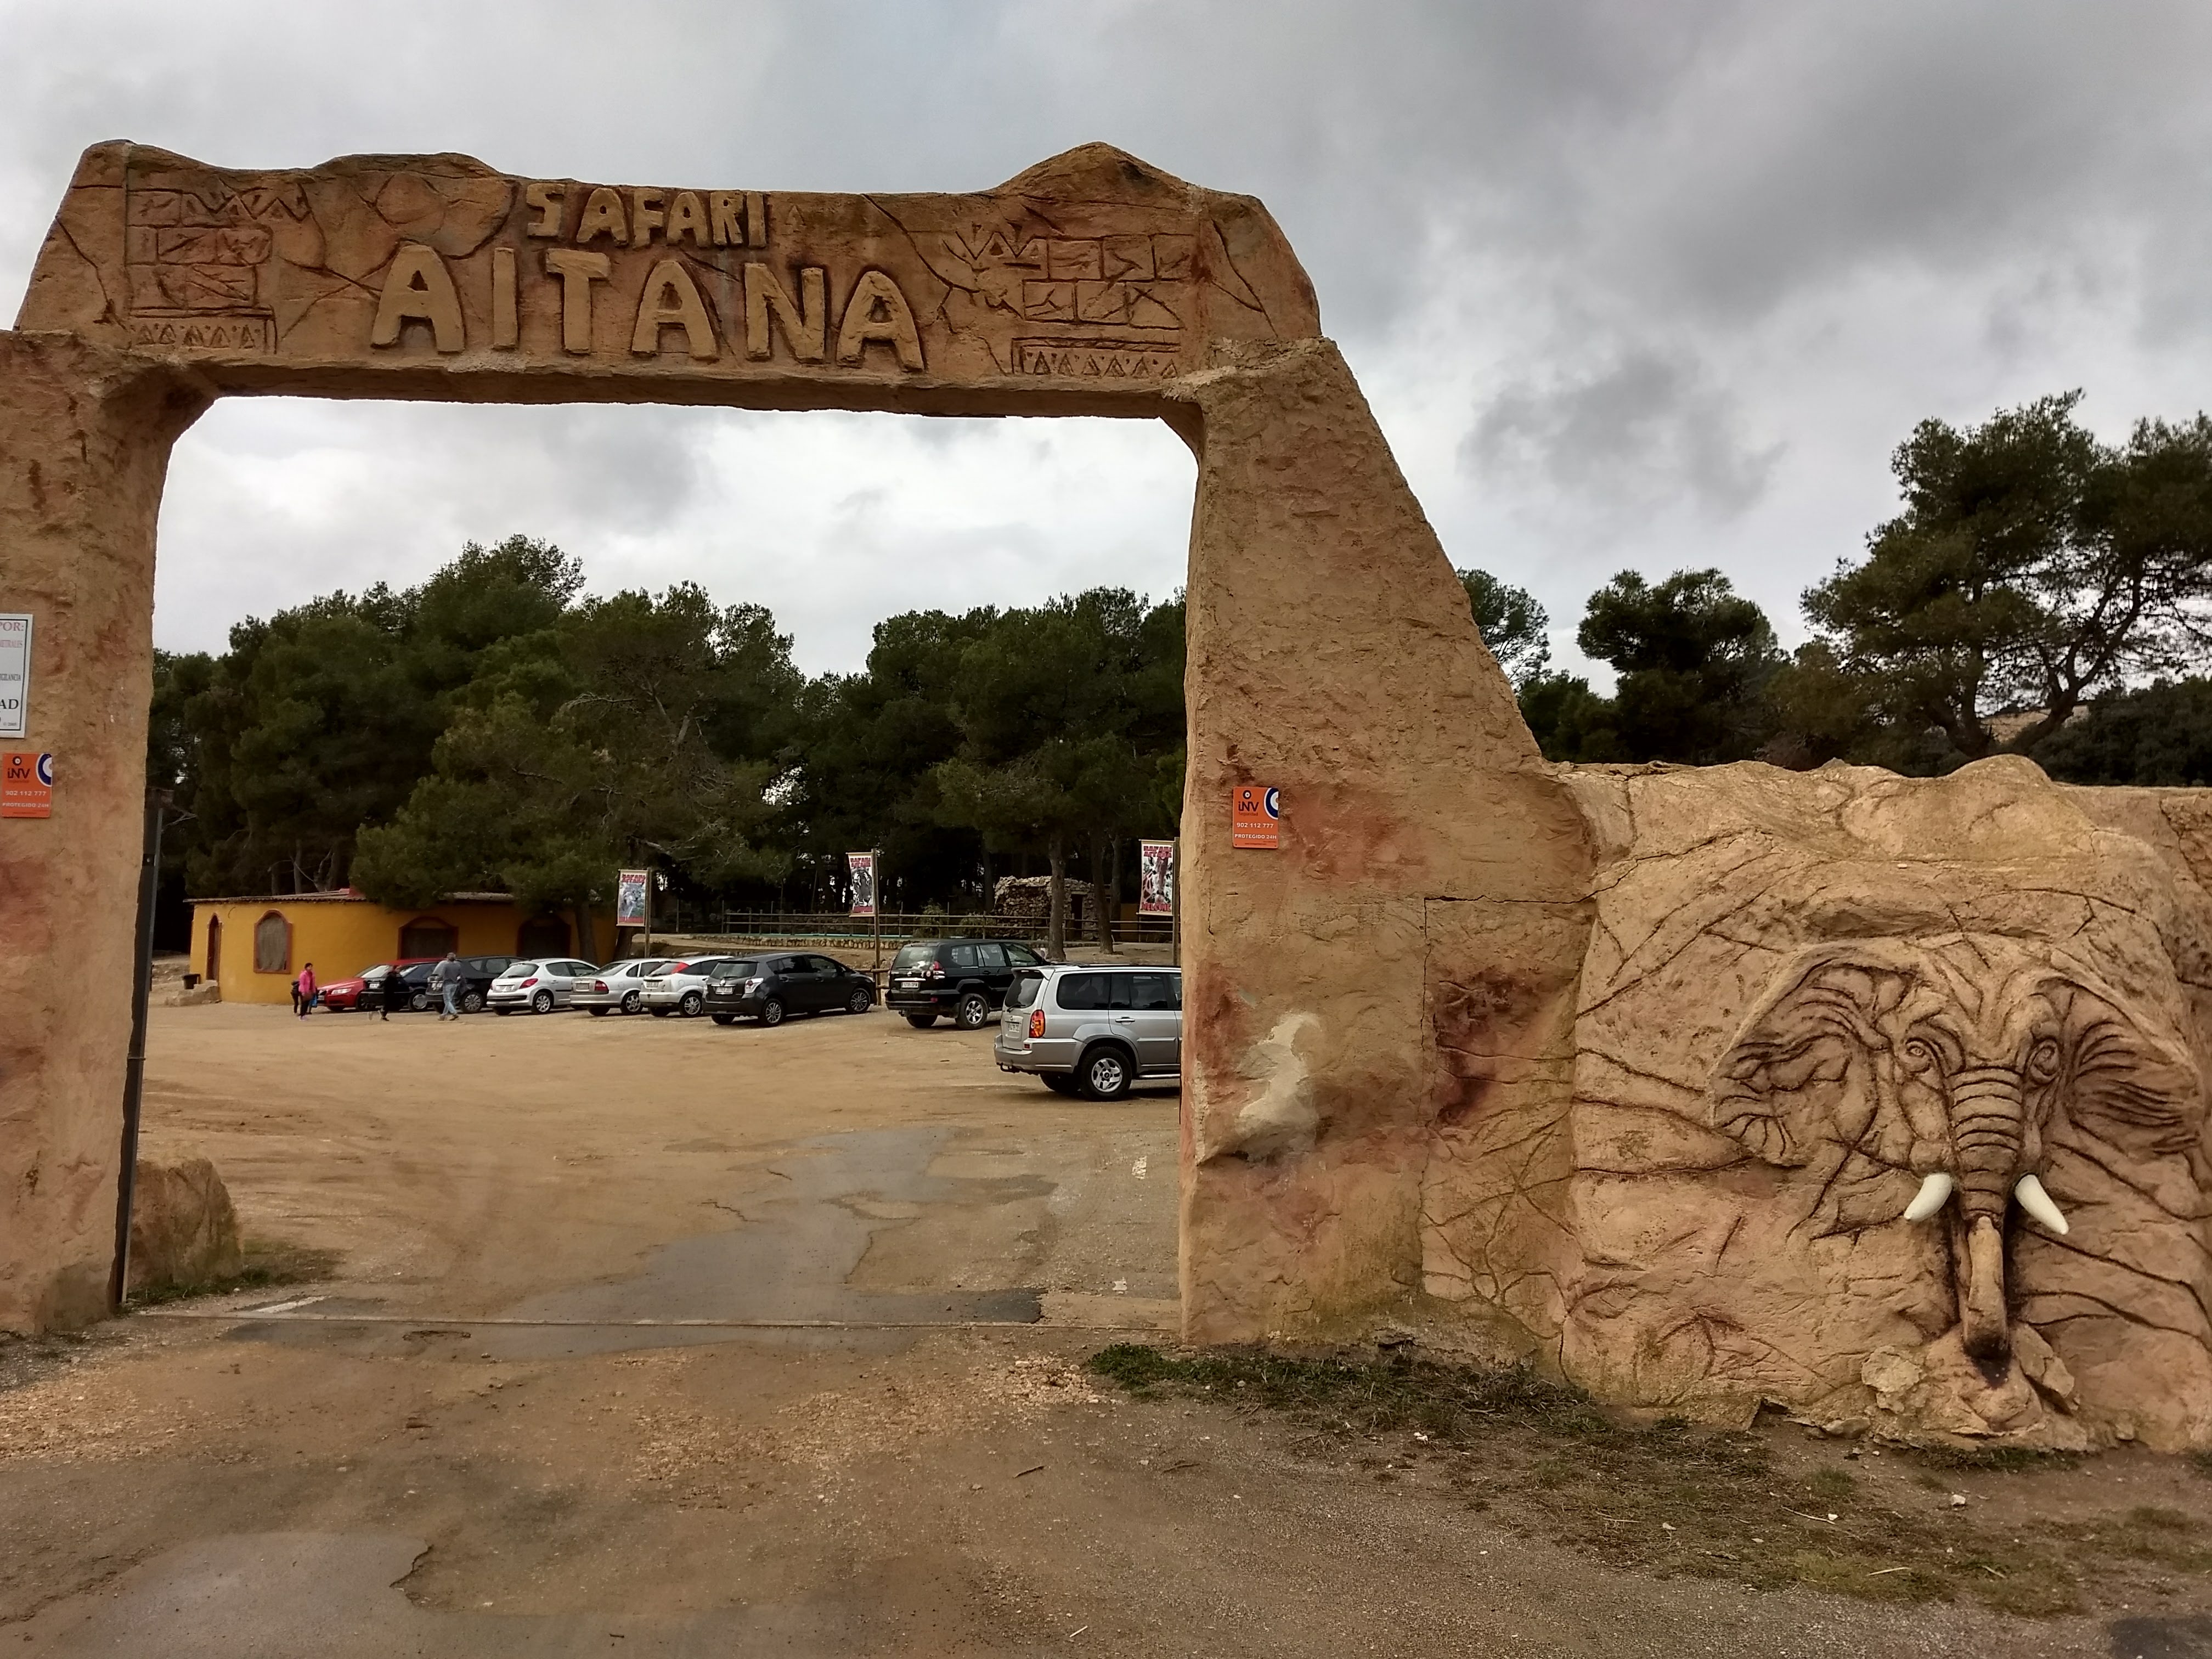 Safari Aitana – ein tierisch interessantes Abenteuer